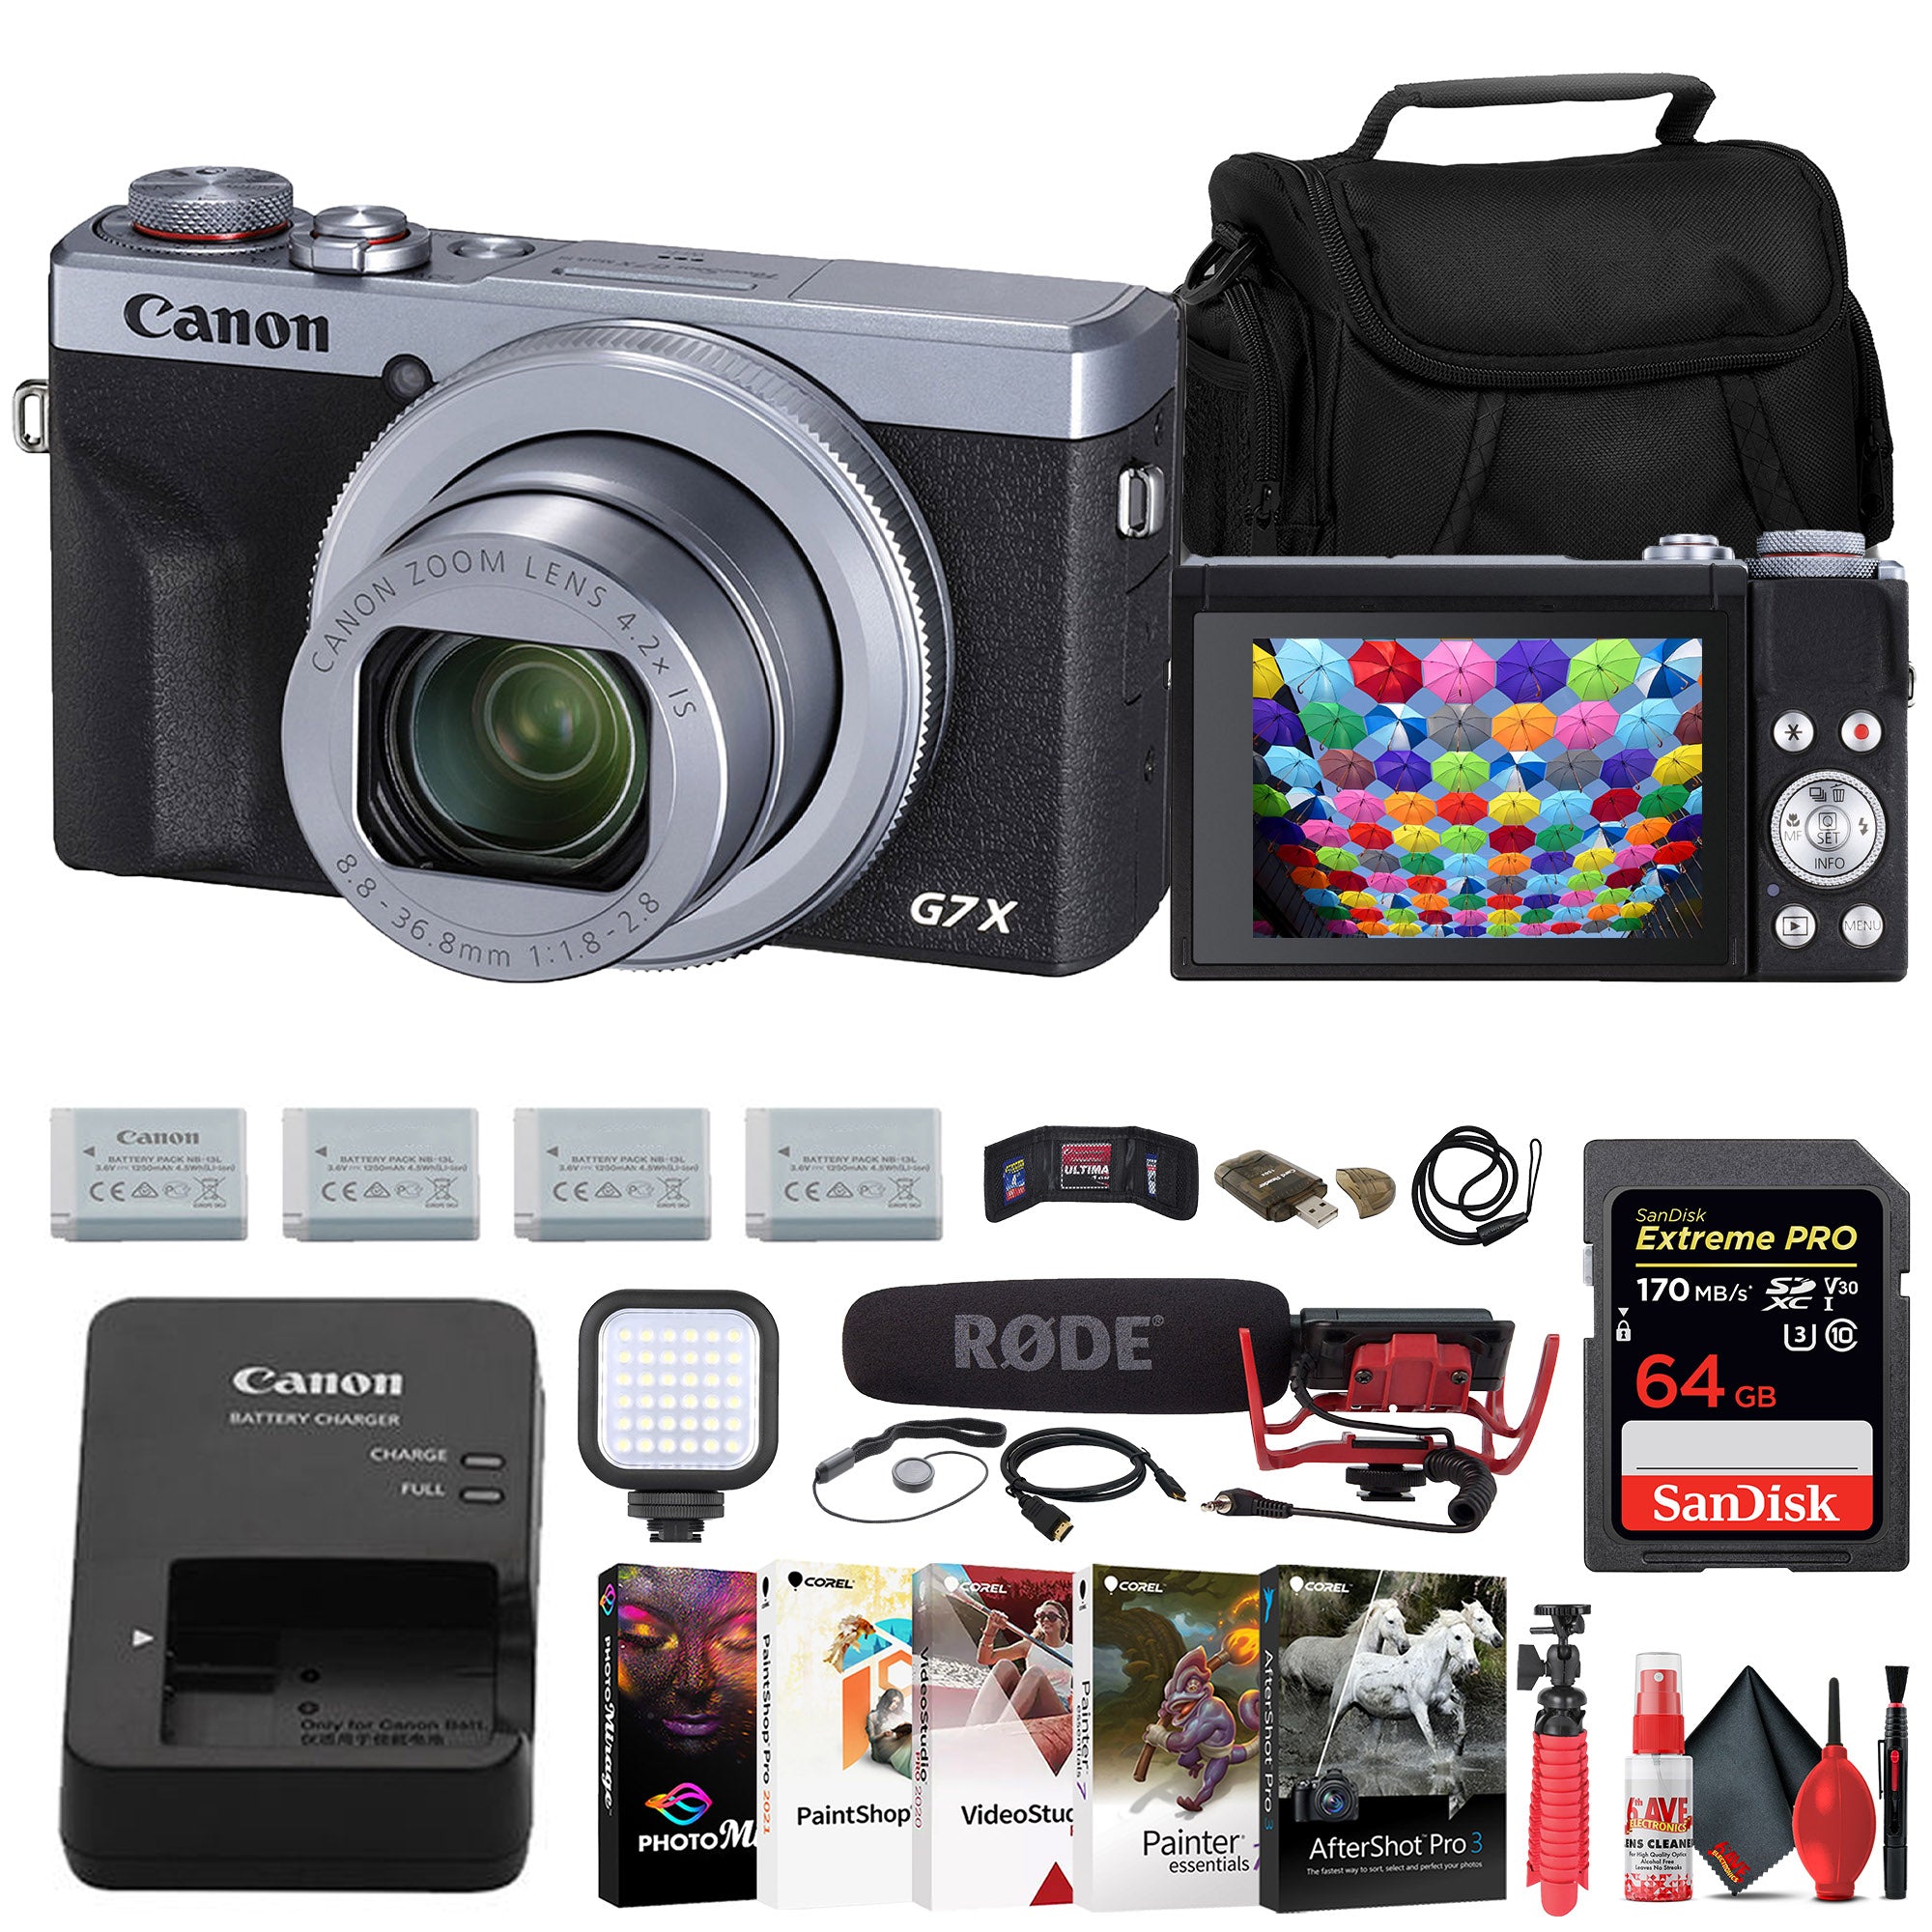 Canon PowerShot G7 X Mark III Digital Camera + Mic + 64GB Card + 3 x Battery + More